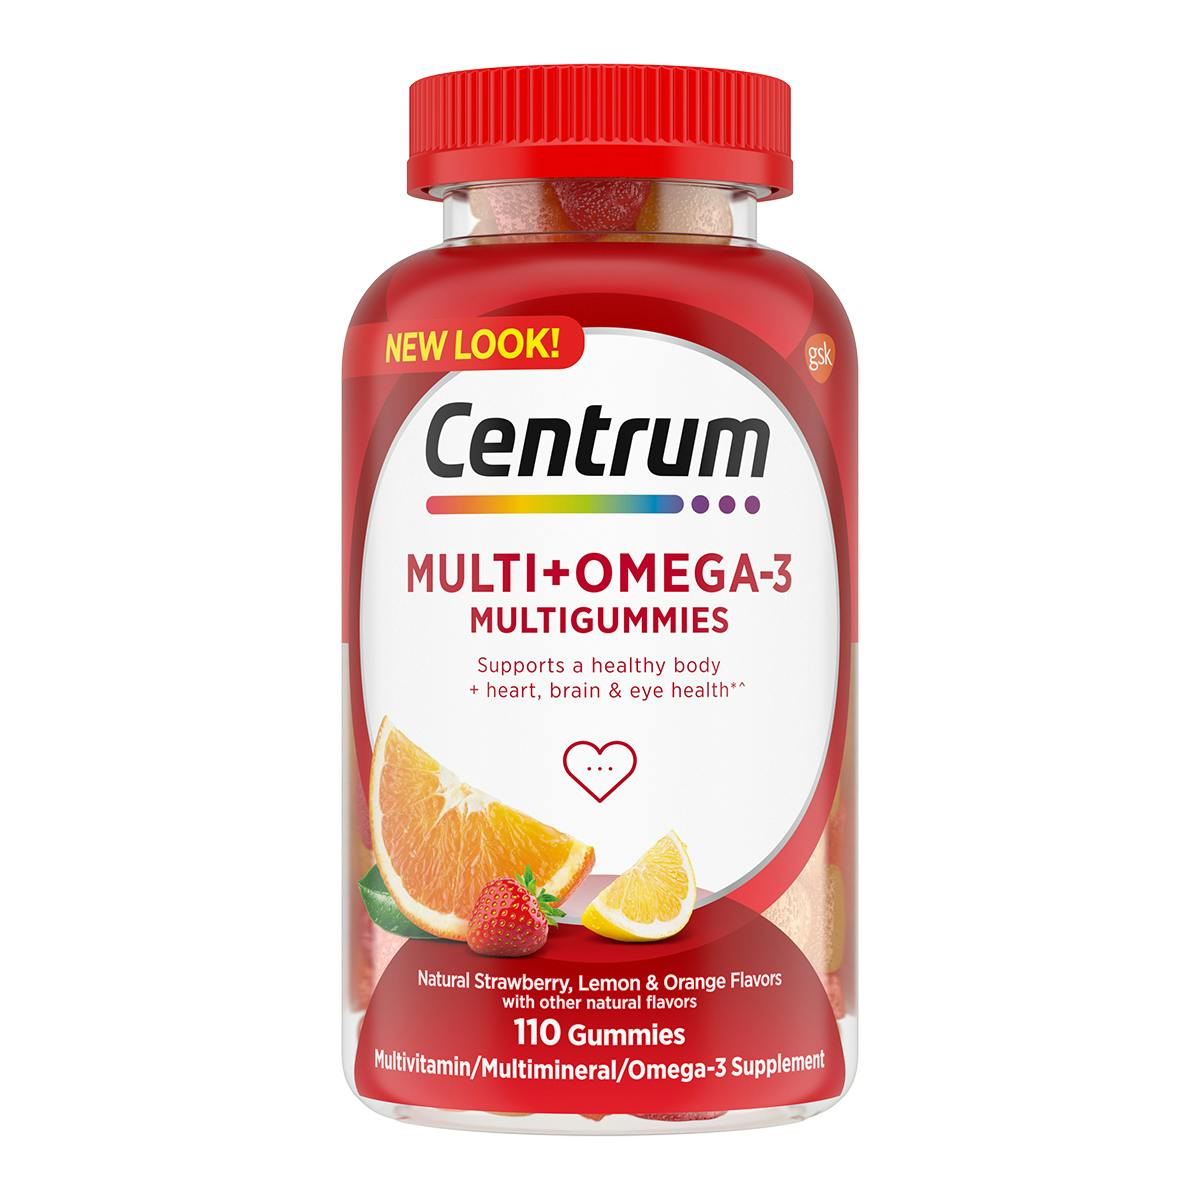 Bottle of Centrum MultiGummies Multi plus Omega 3 multivitamins